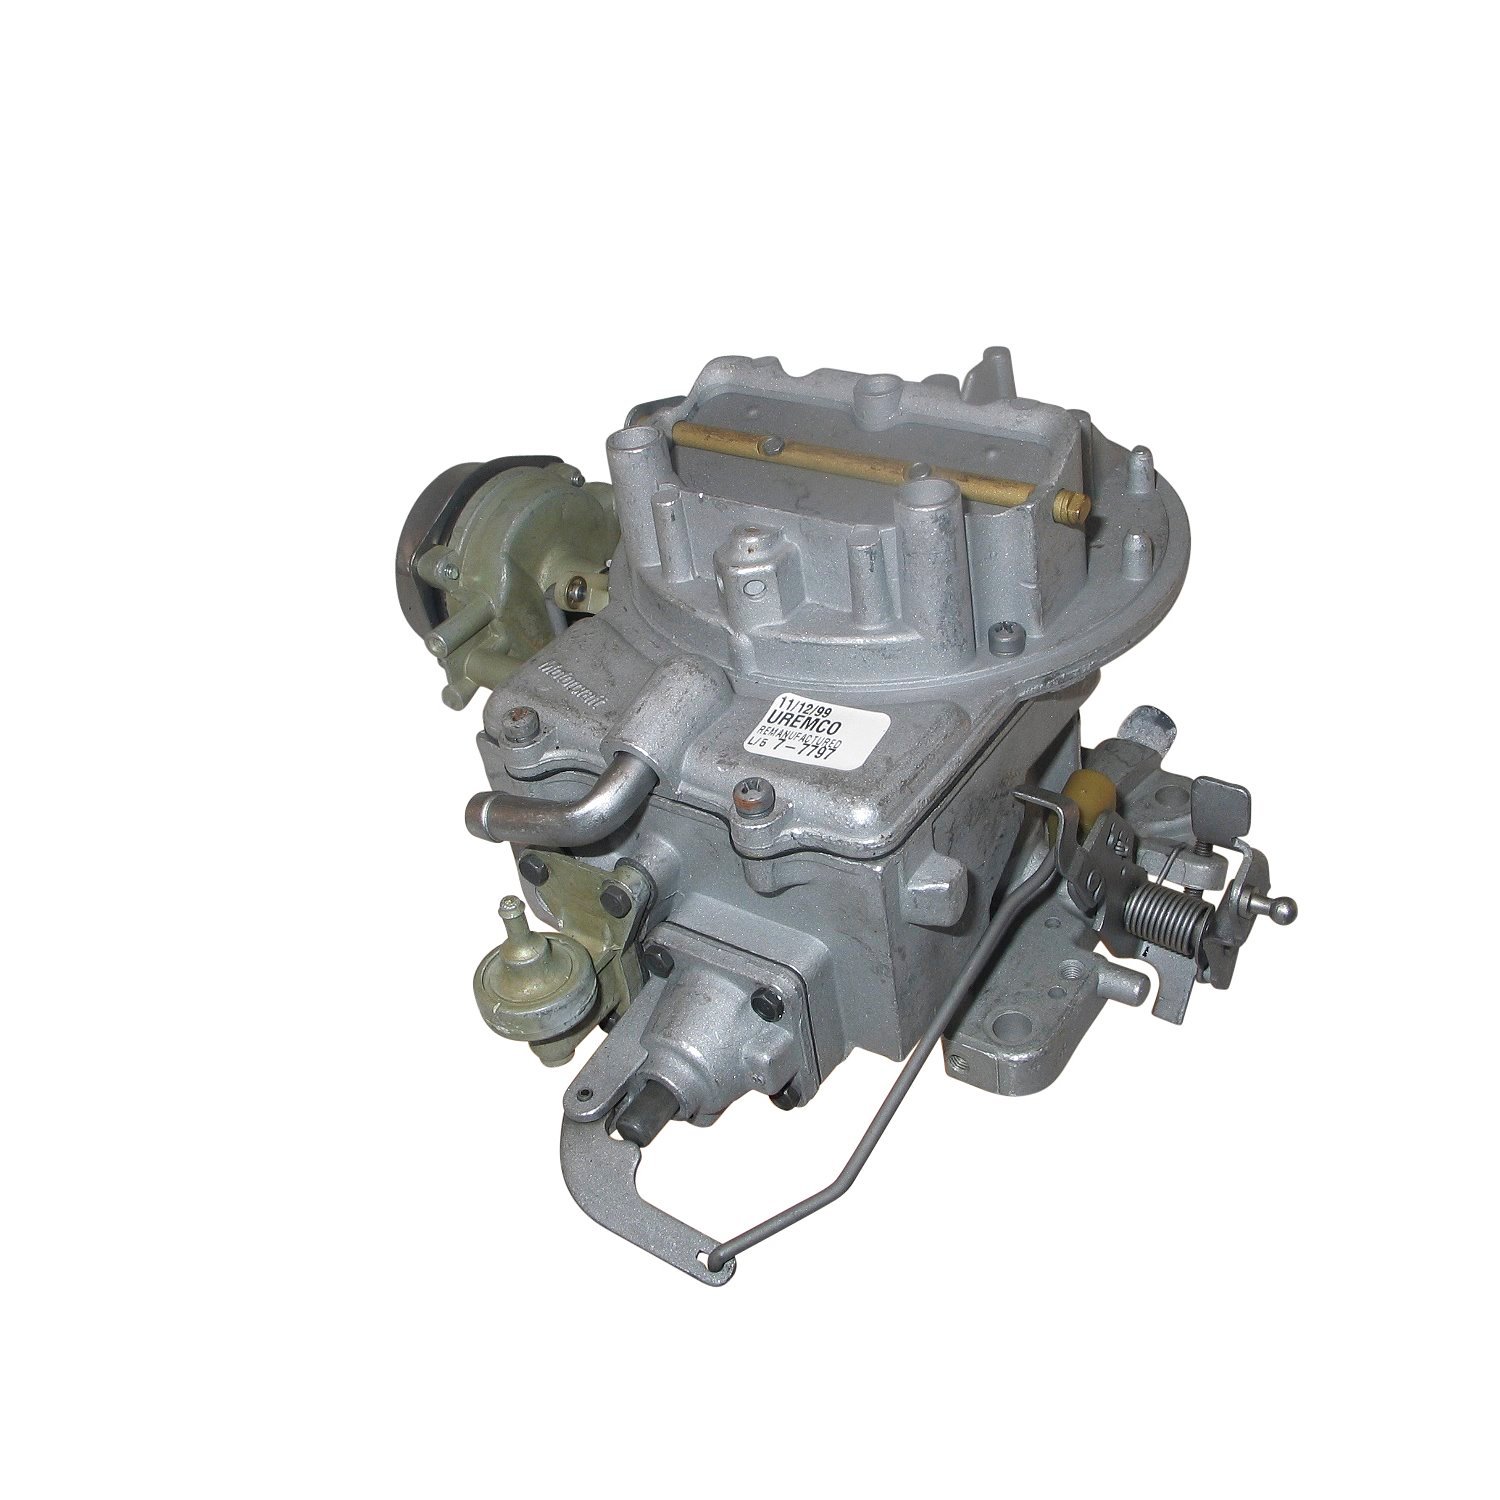 7-7797 Motorcraft Remanufactured Carburetor, 2150, w/A/C-Style